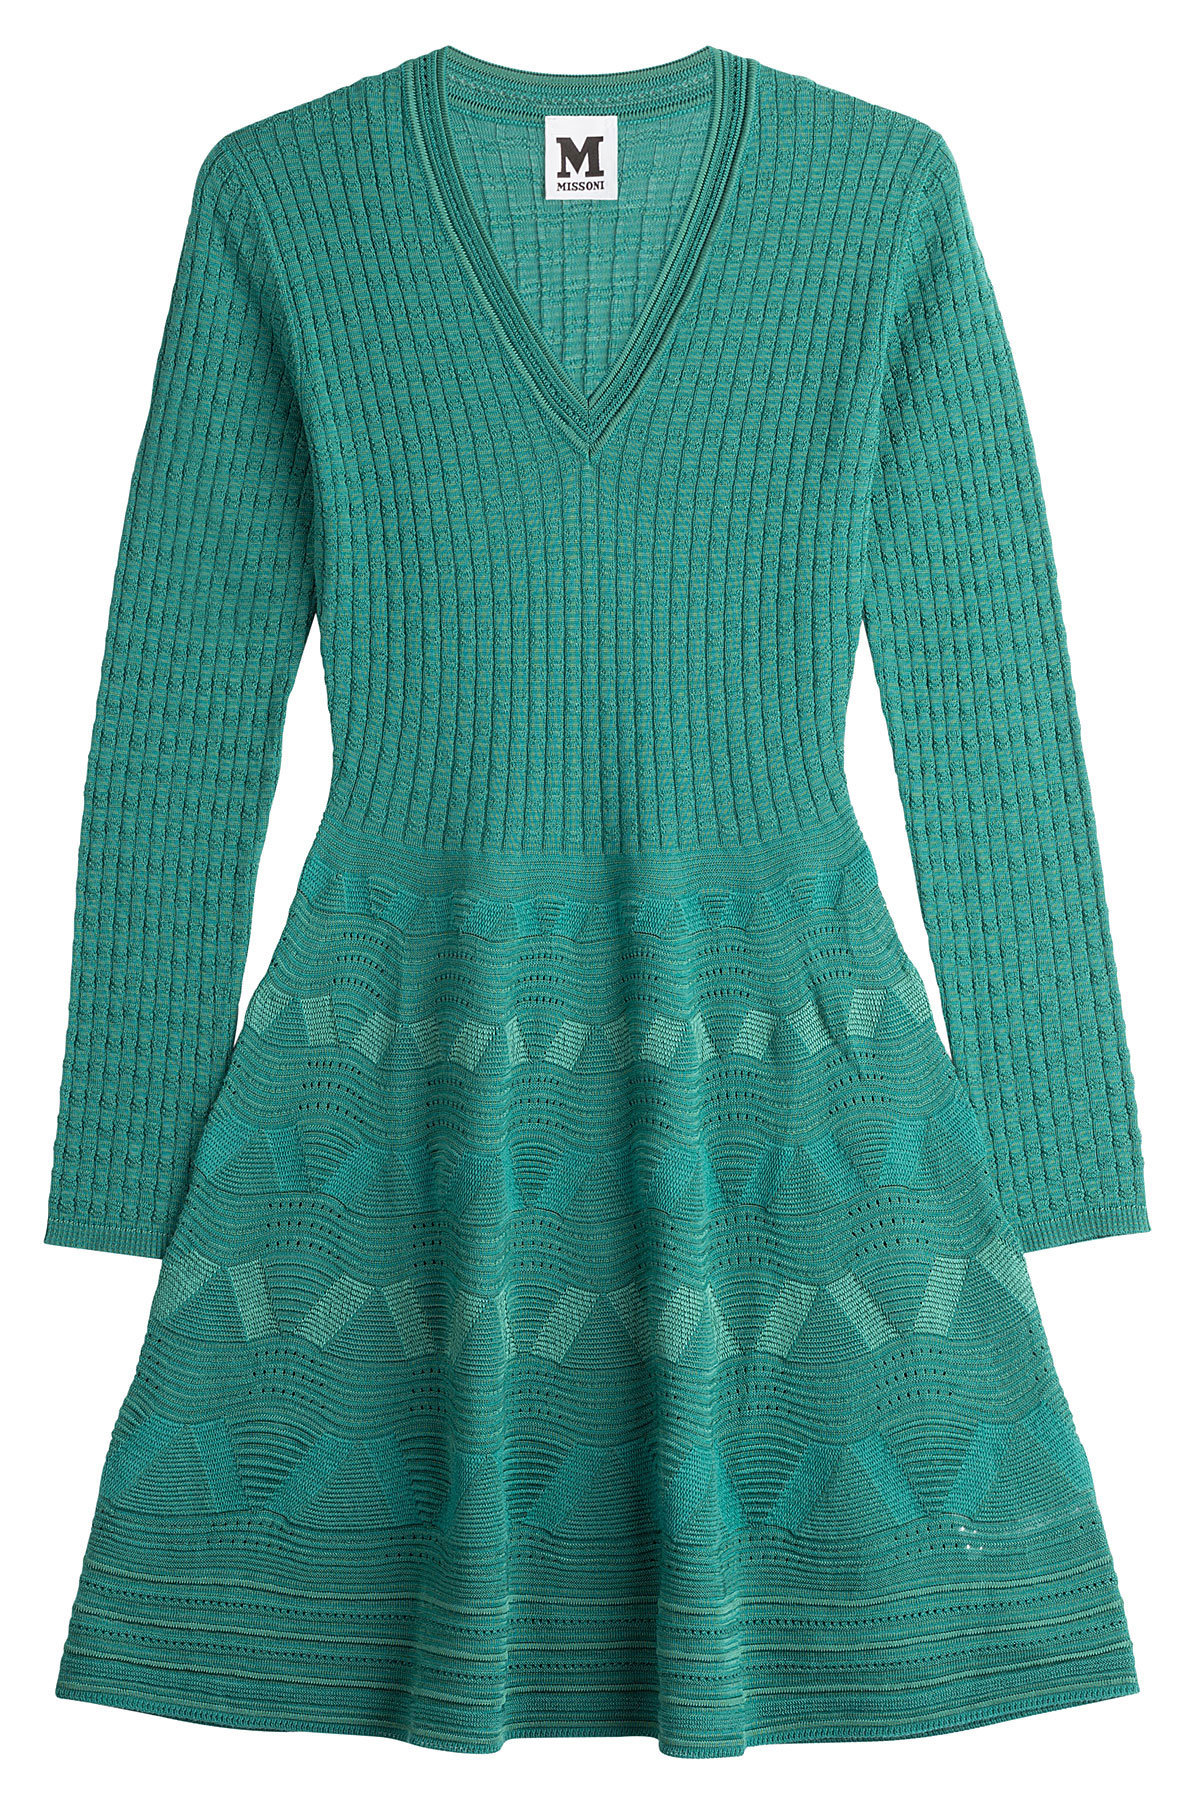 M Missoni - Knit Dress with Virgin Wool